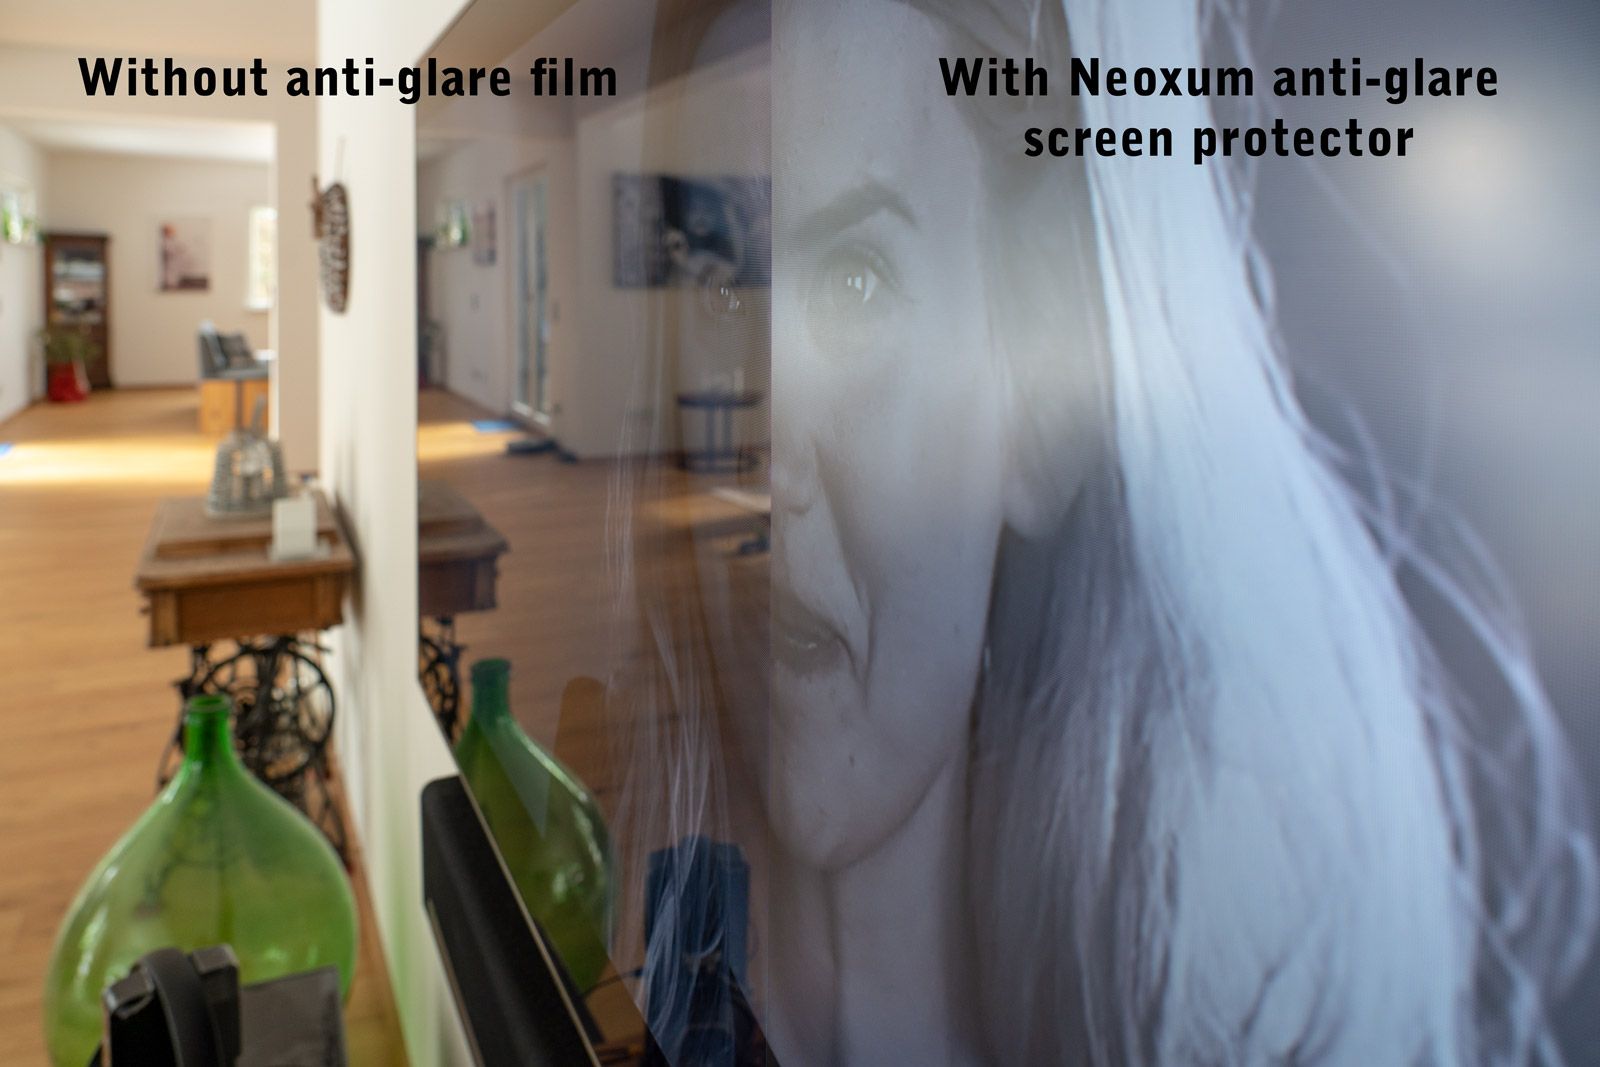 Neoxum anti-glare film on TV reduces reflections